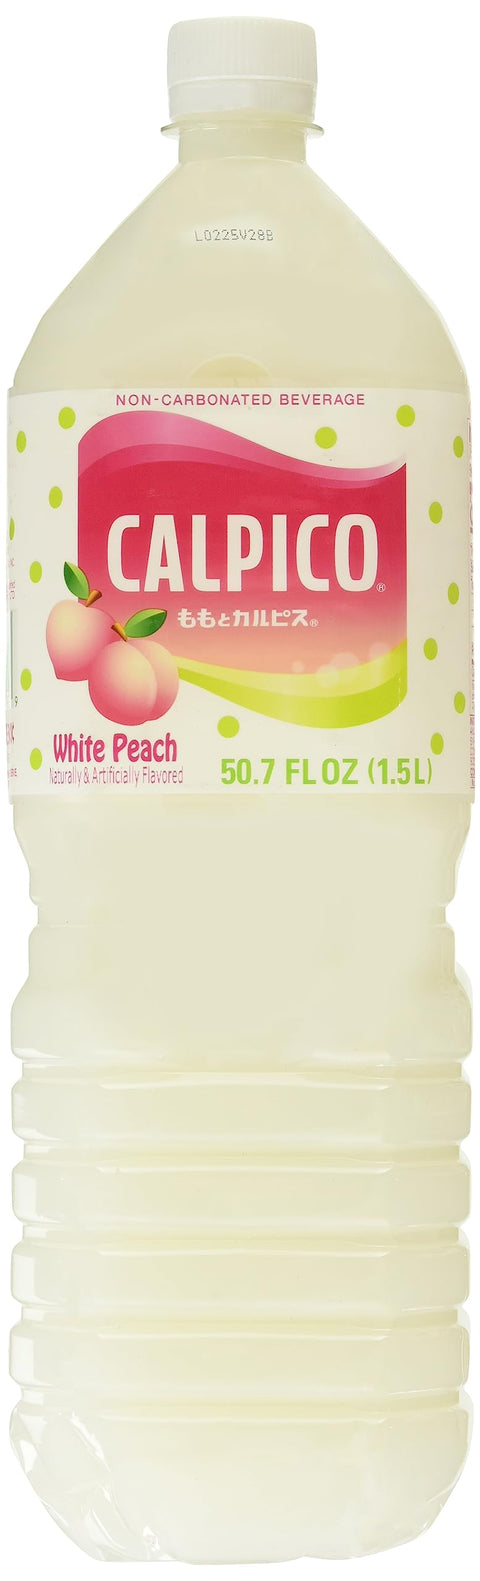 Calpico Soft Drink White Peach, 50.7 fz